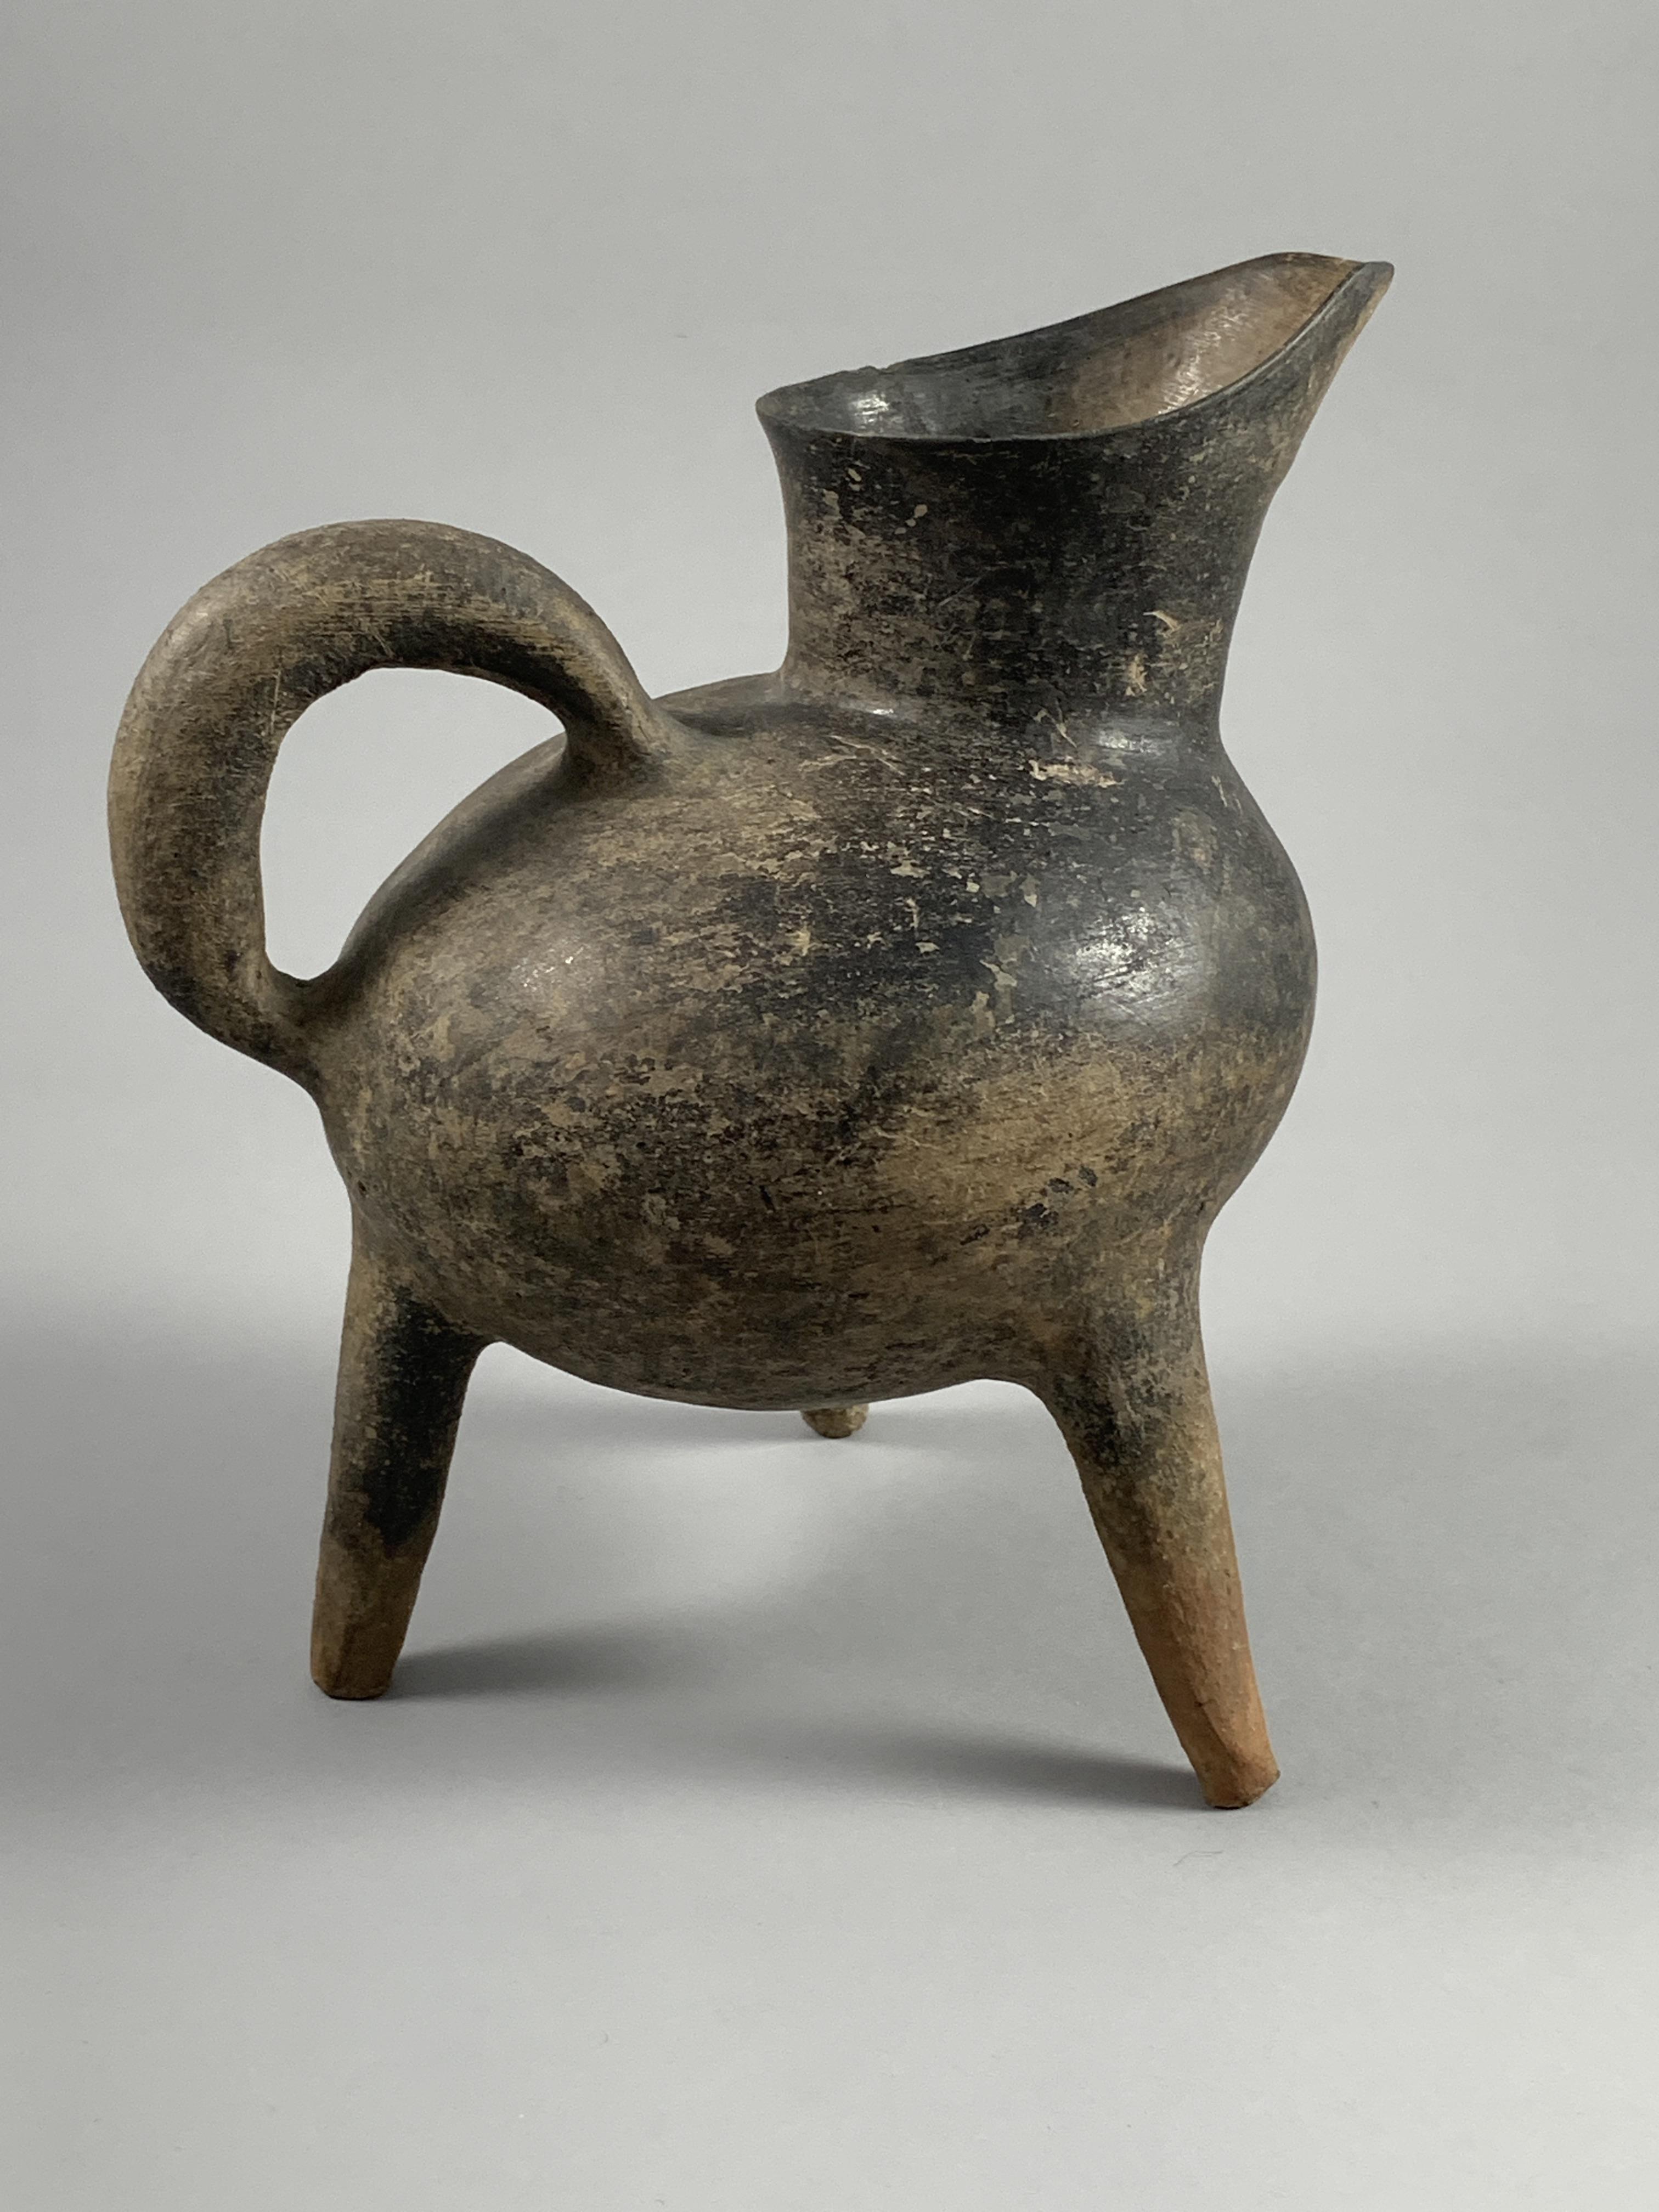 A Tripod Pottery Vessel, Liangzhu Culture (3300-2200 Bc) - Image 6 of 15